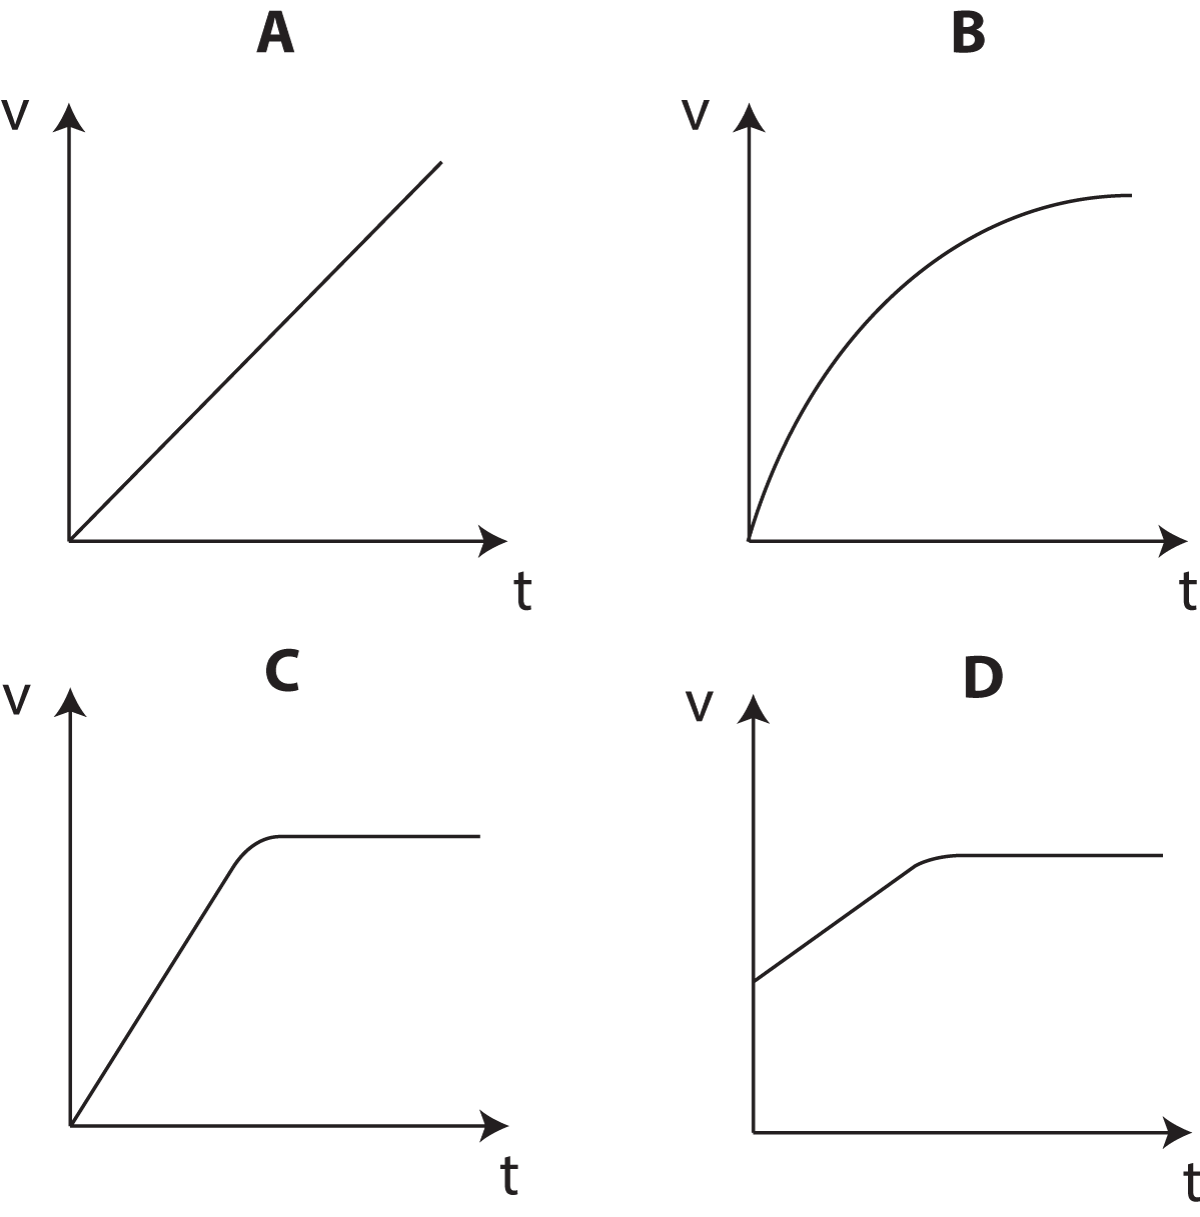 v_t graphs x 4 showing bus acceleration